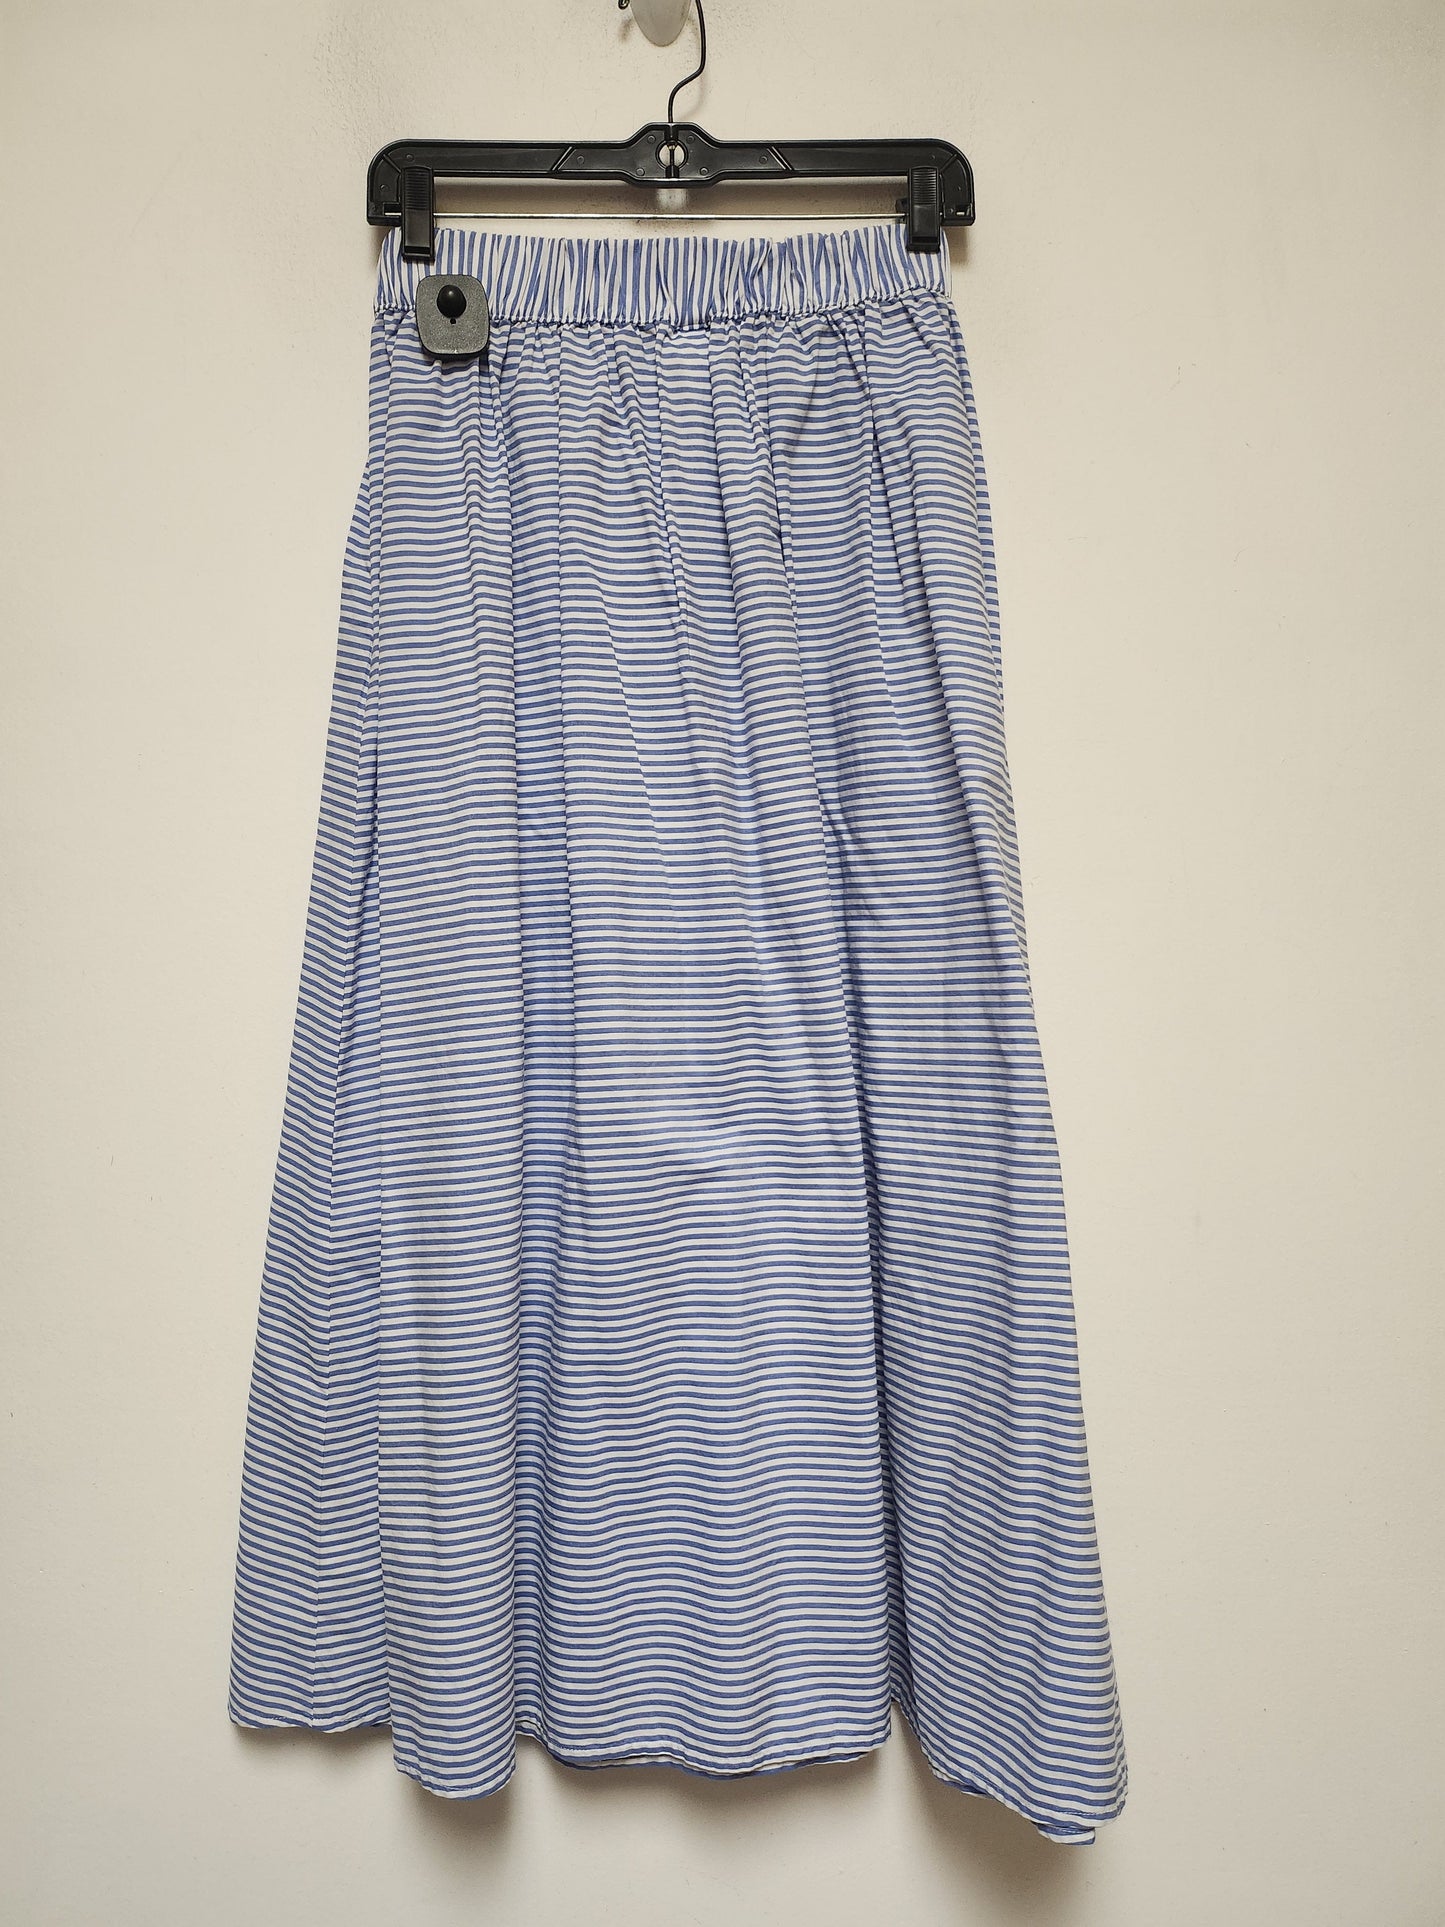 Striped Pattern Skirt Maxi Target-designer, Size 6